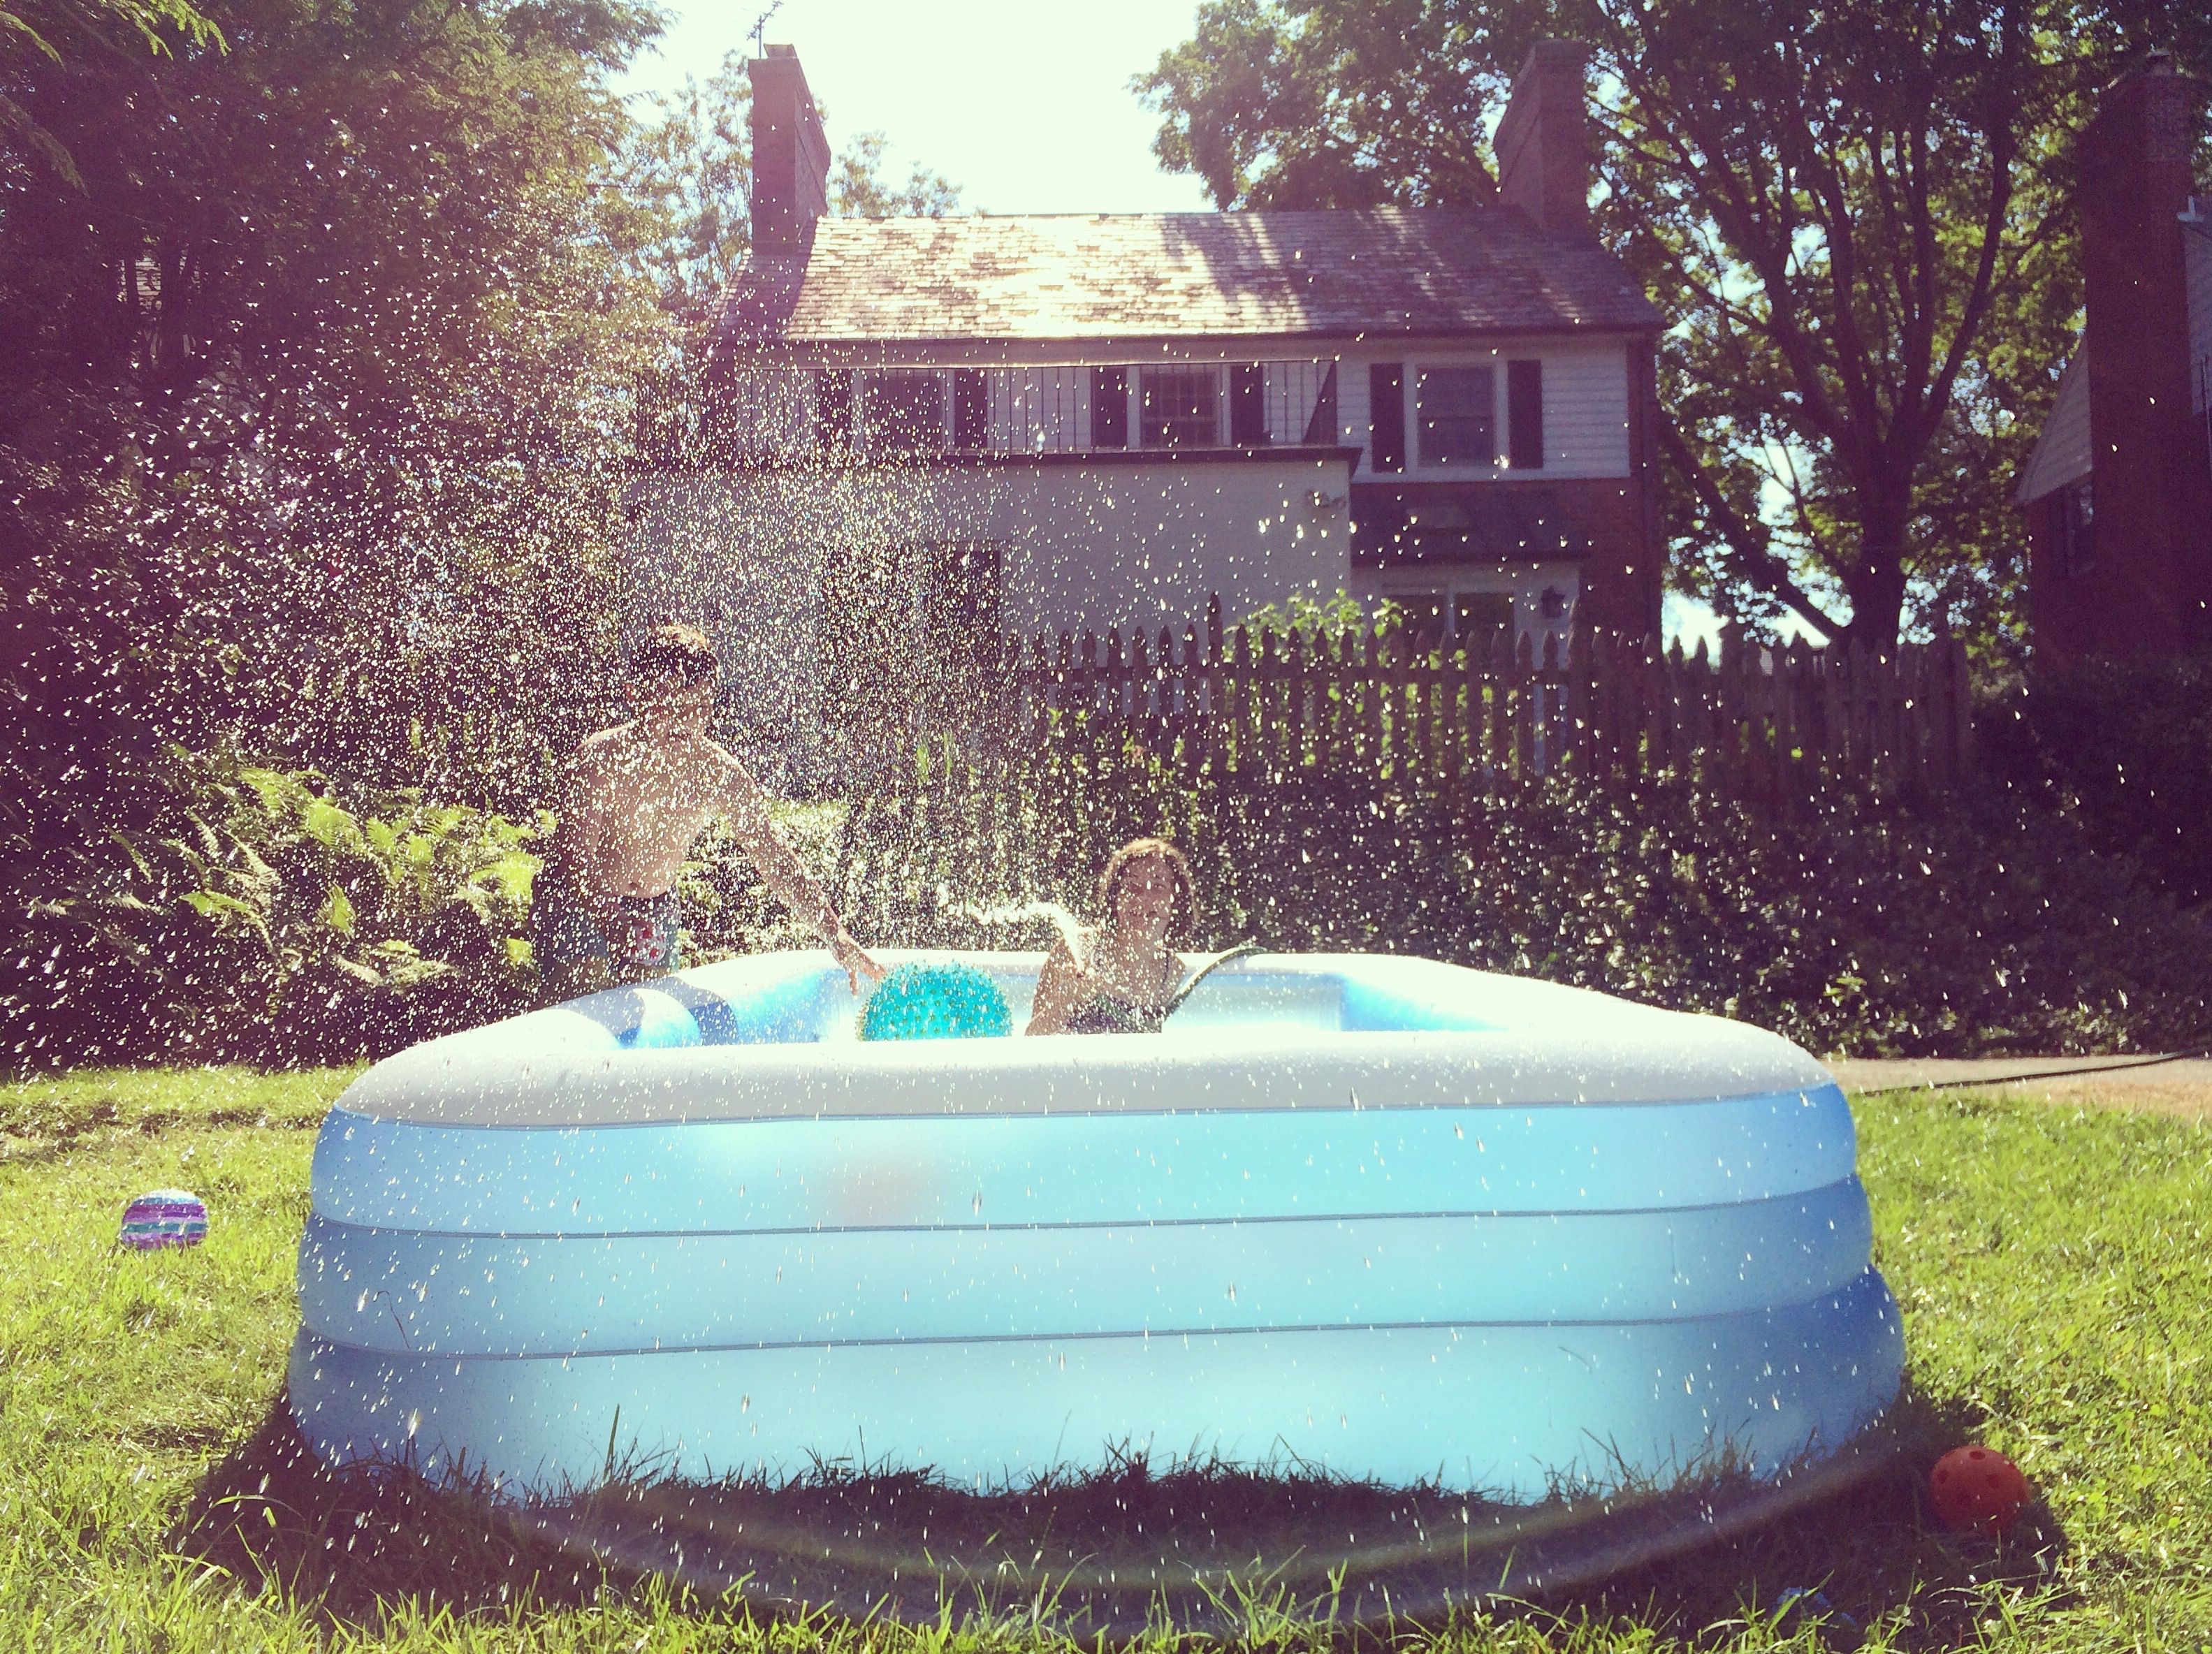 best backyard inflatable pools